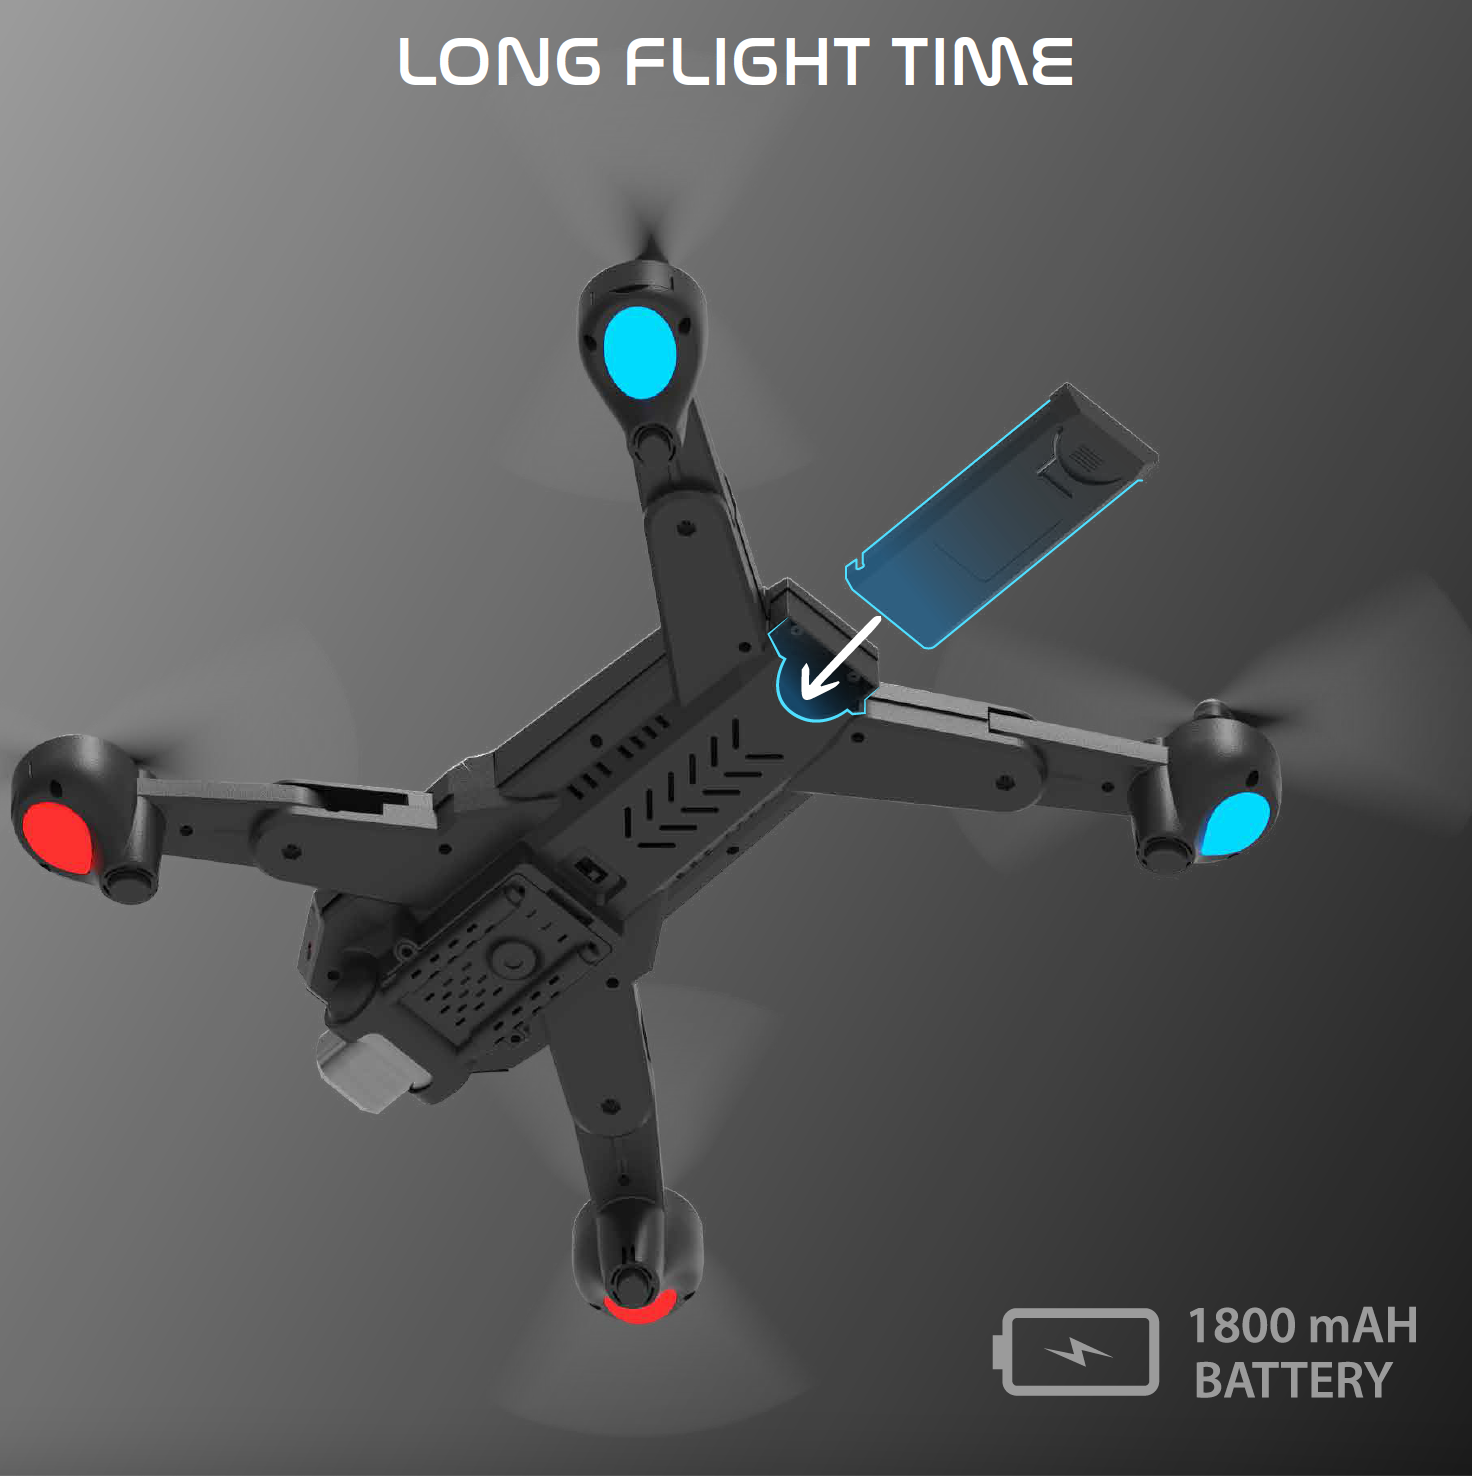 electrobotic garuda drone rechargeable battery 1800 mAh